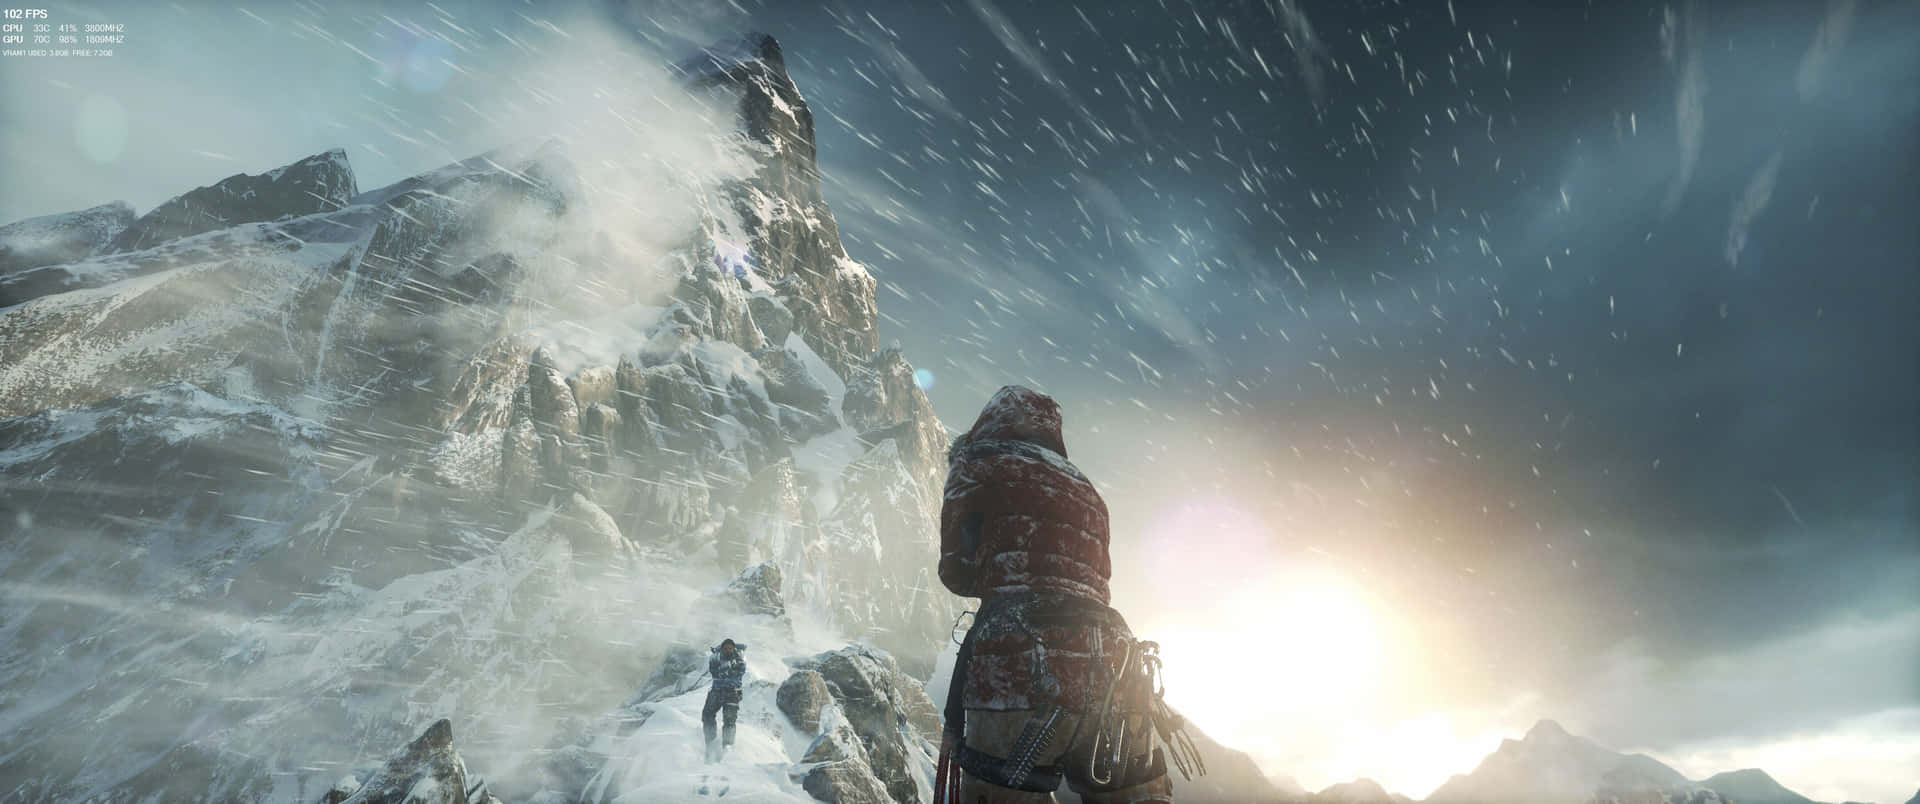 Mountain Peak 3440x1440p Rise Of The Tomb Raider Background